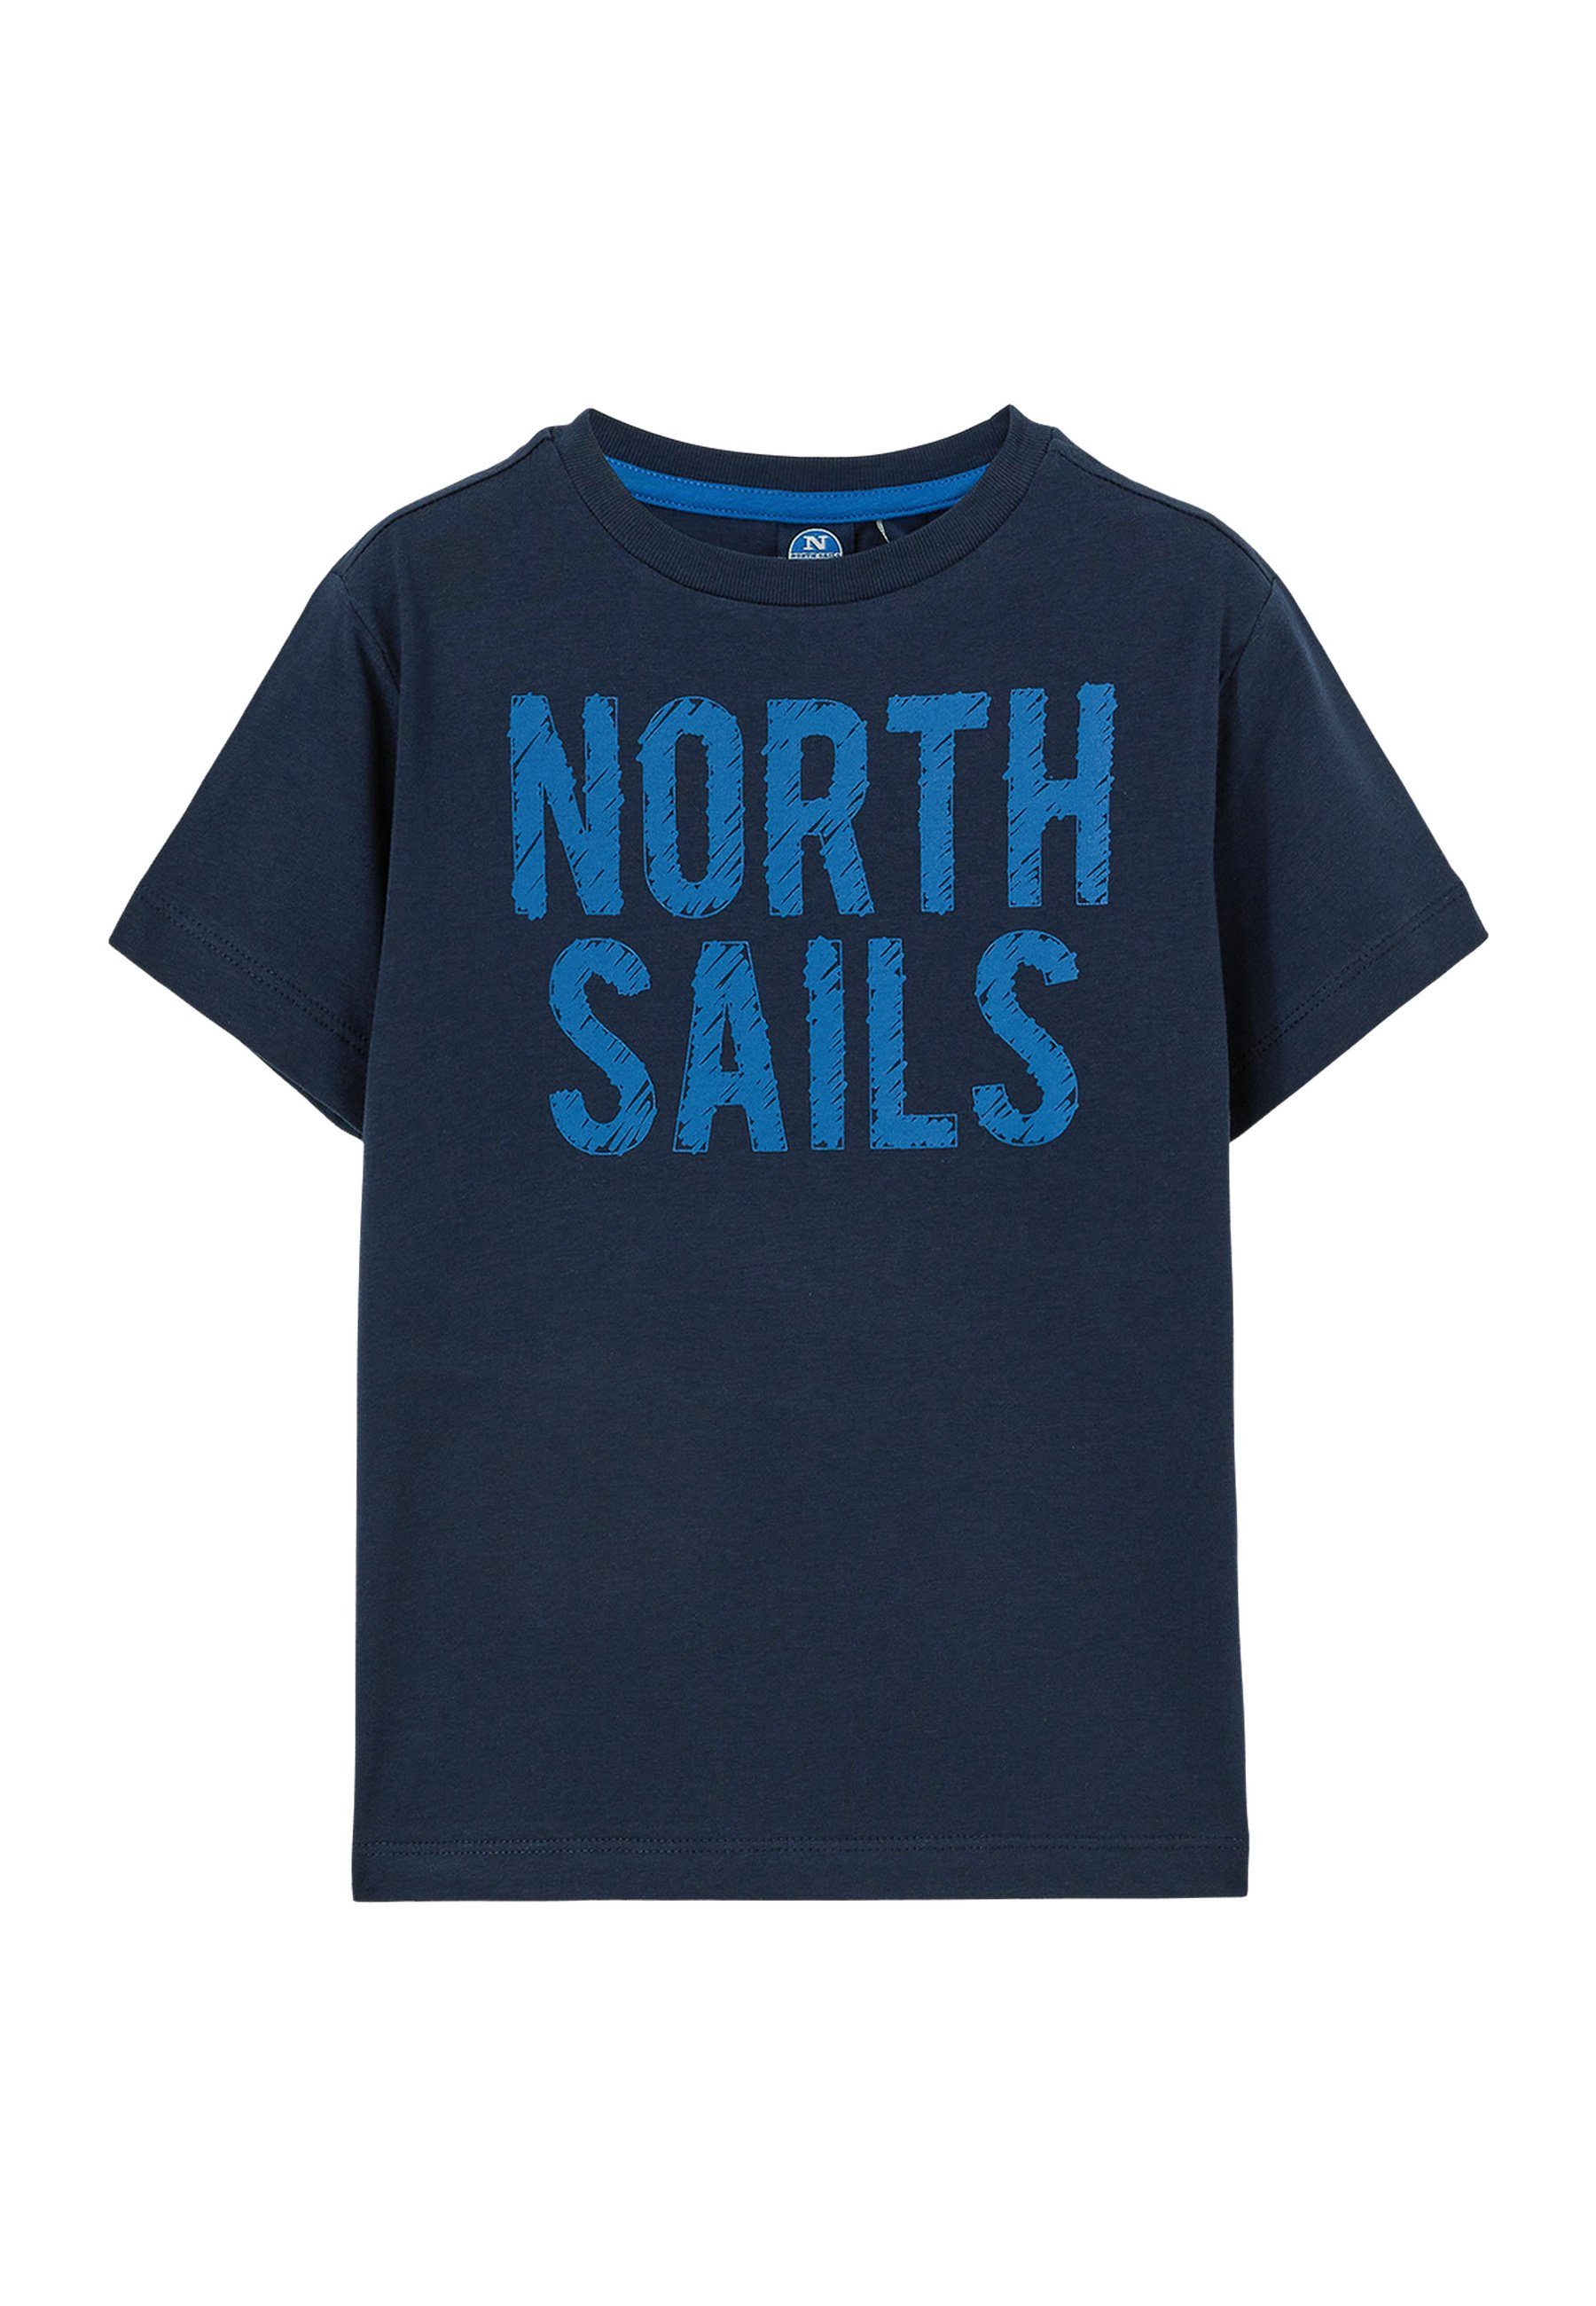 Sails T-Shirt MARINEBLAU Baumwoll-Jersey-T-Shirt North